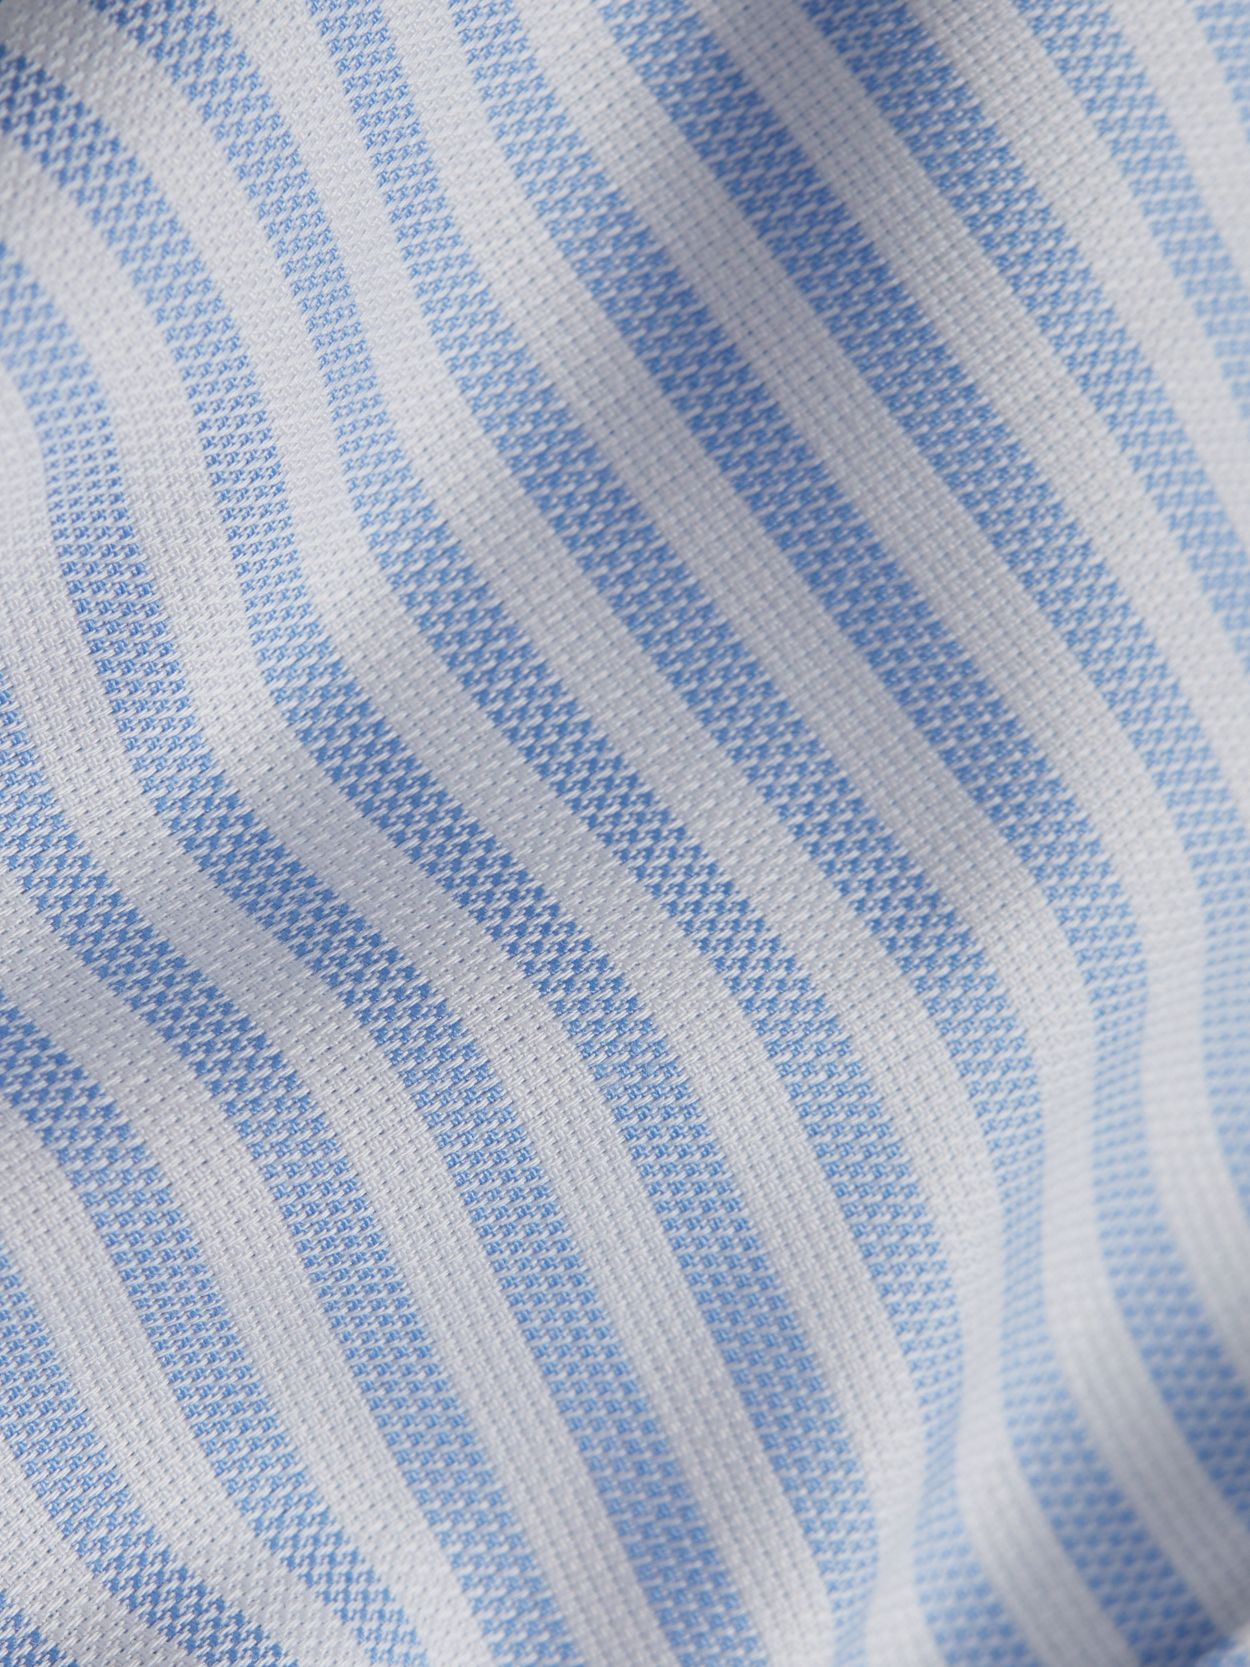 Blue Striped Shirt